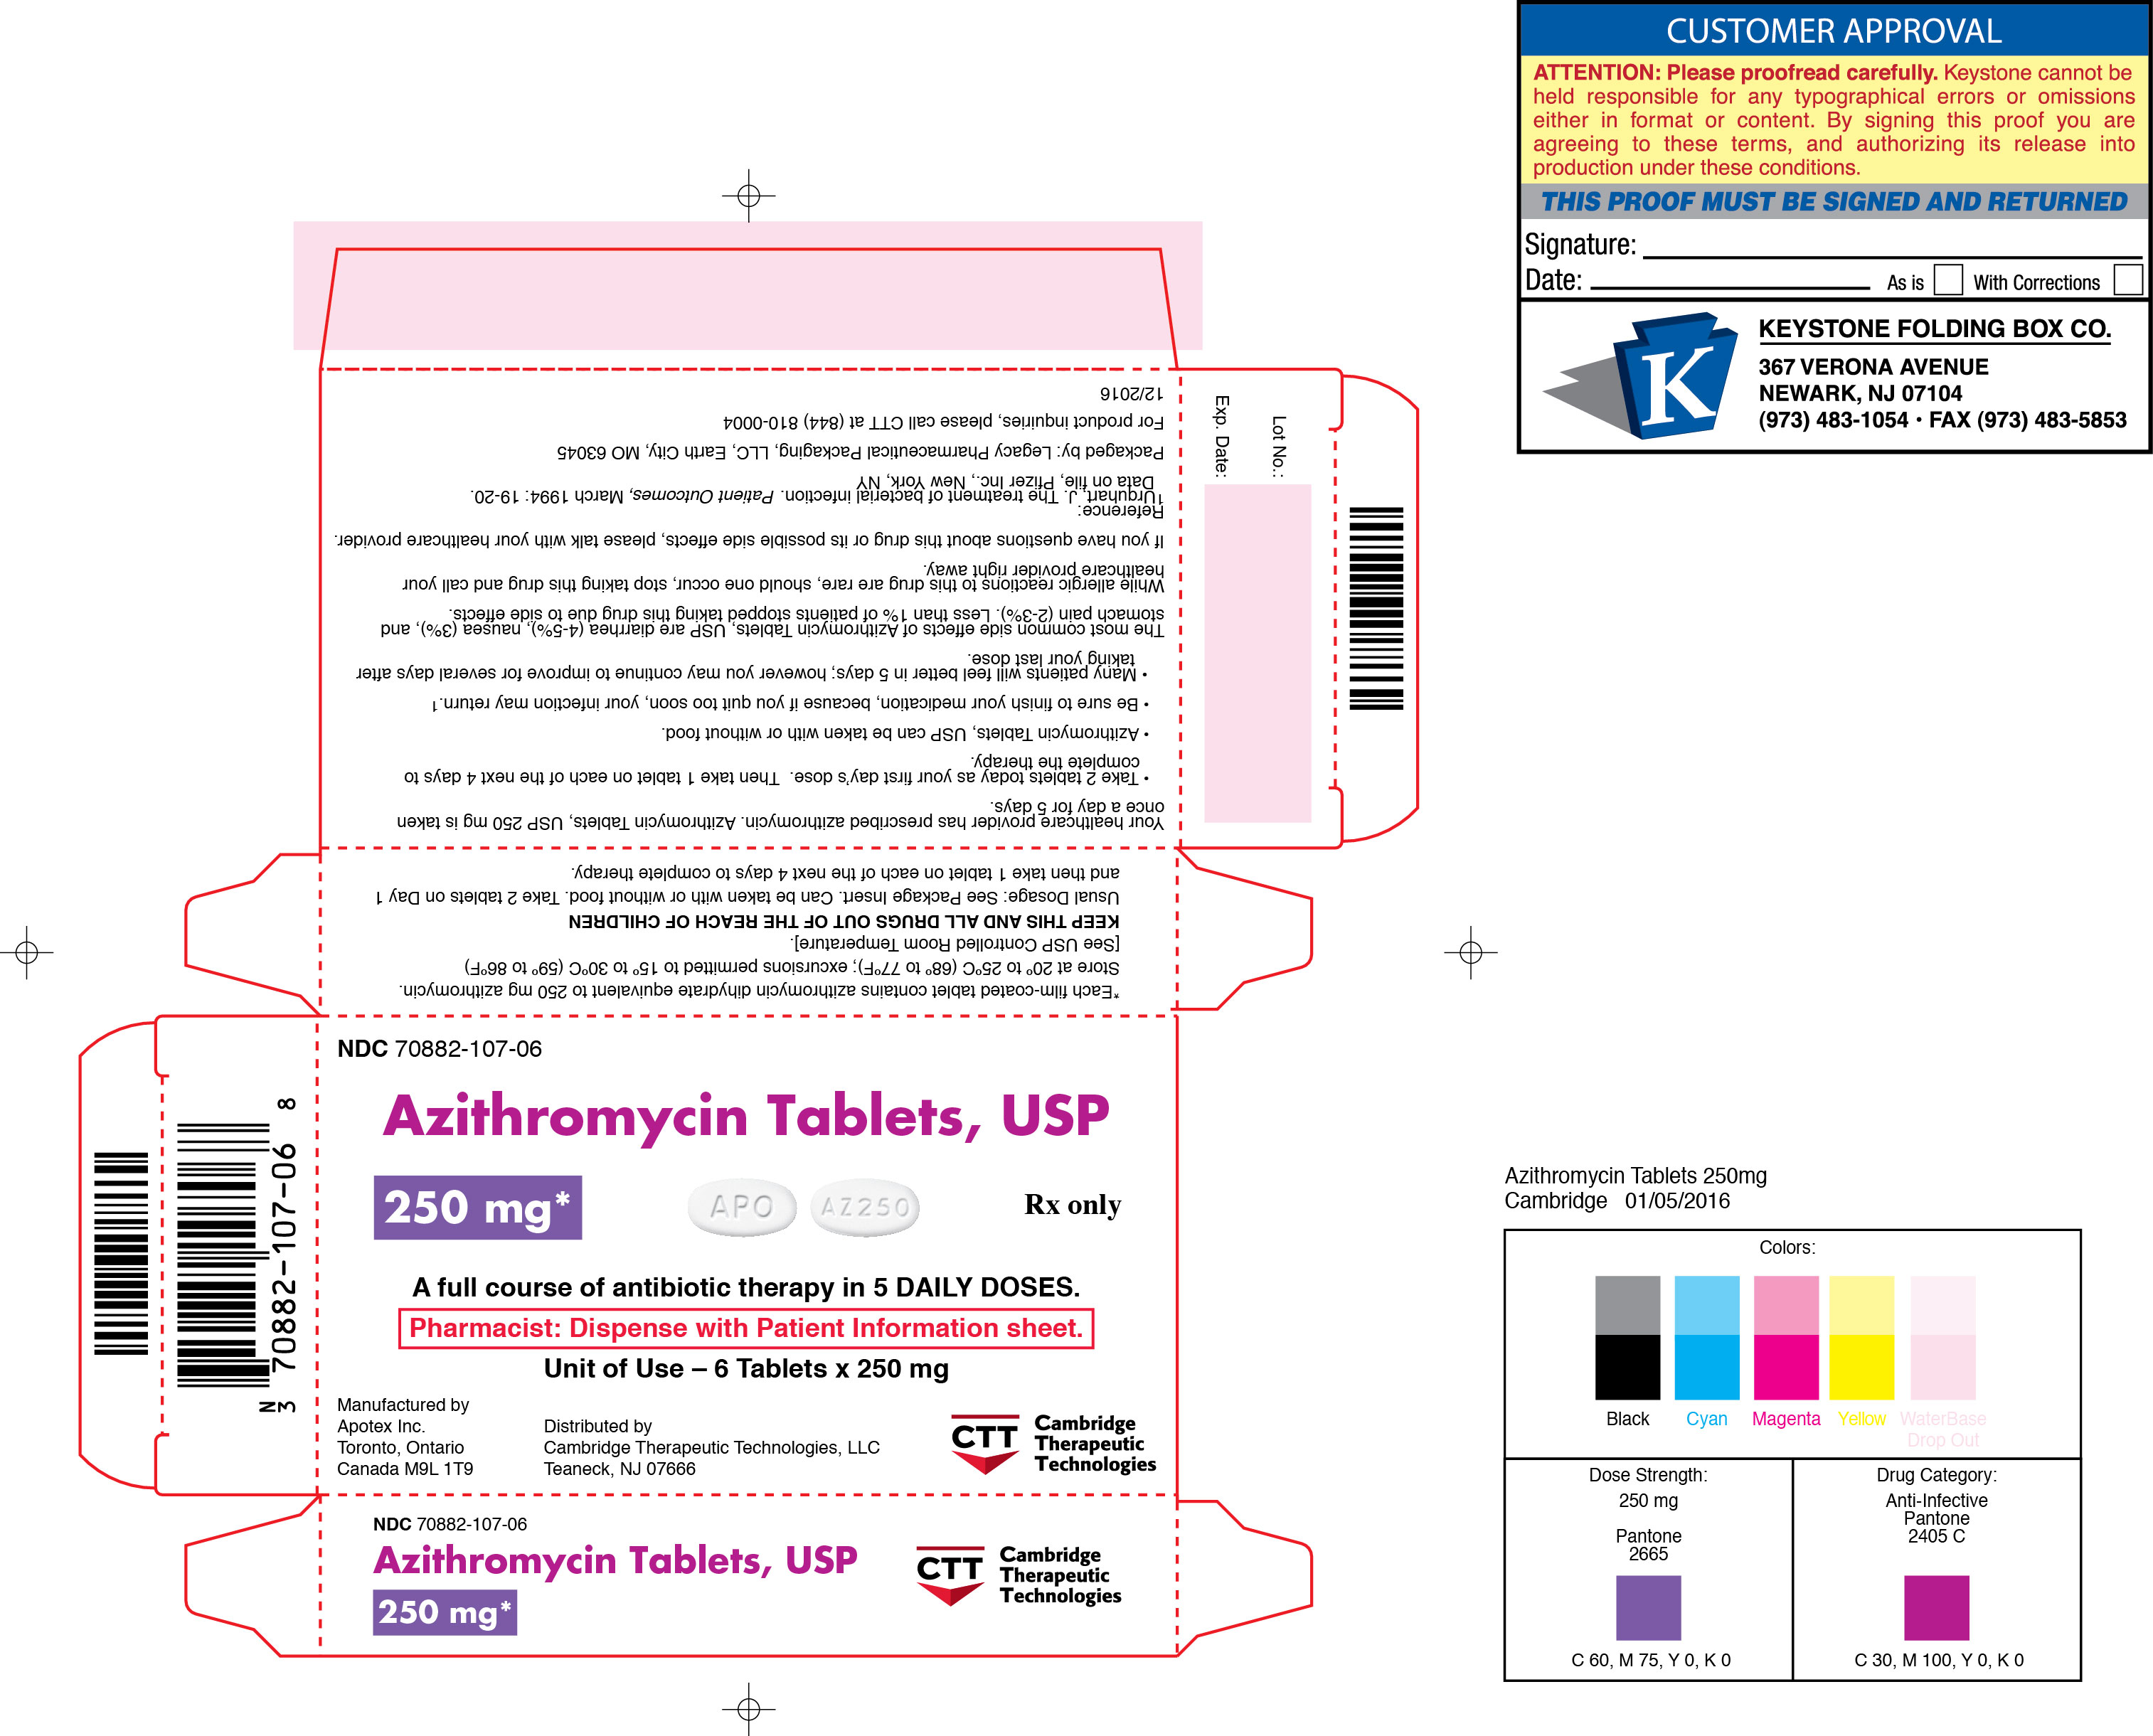 Azithromycin Tablets, USP 250 mg